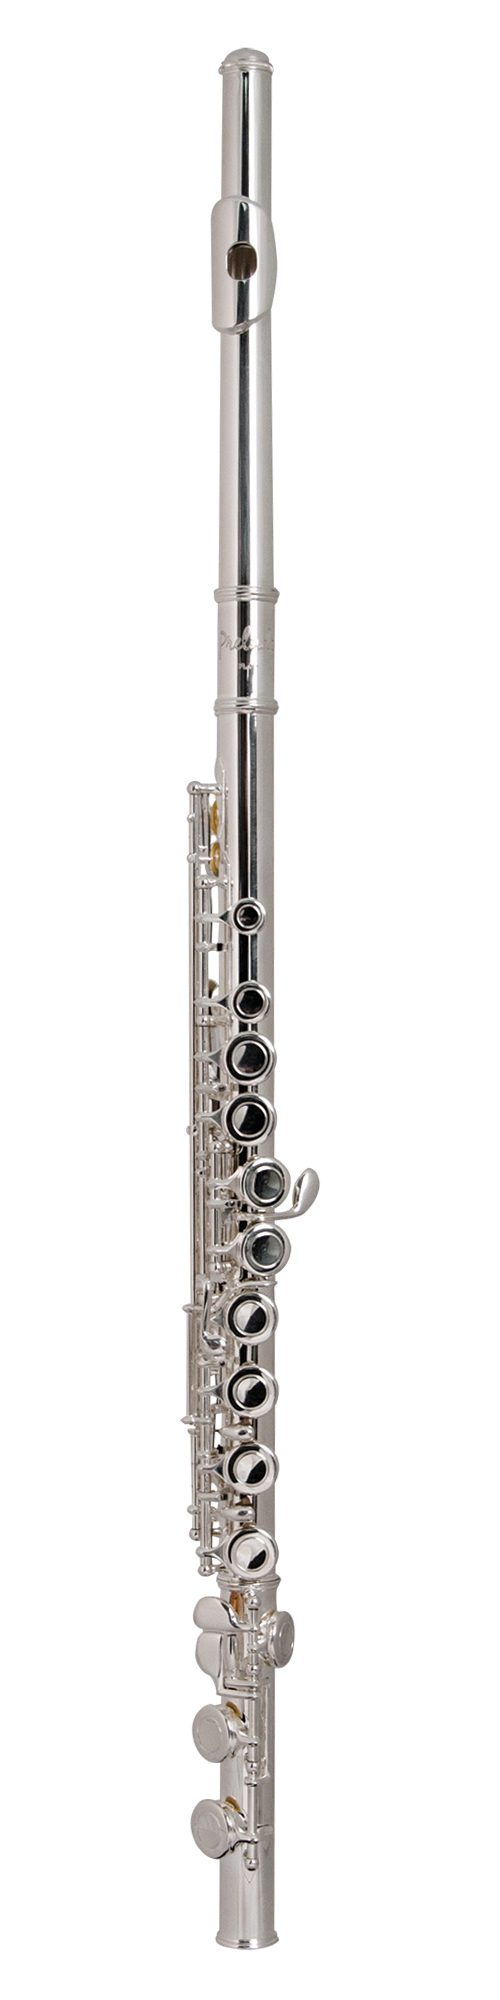 Selmer 711 Prelude Flute